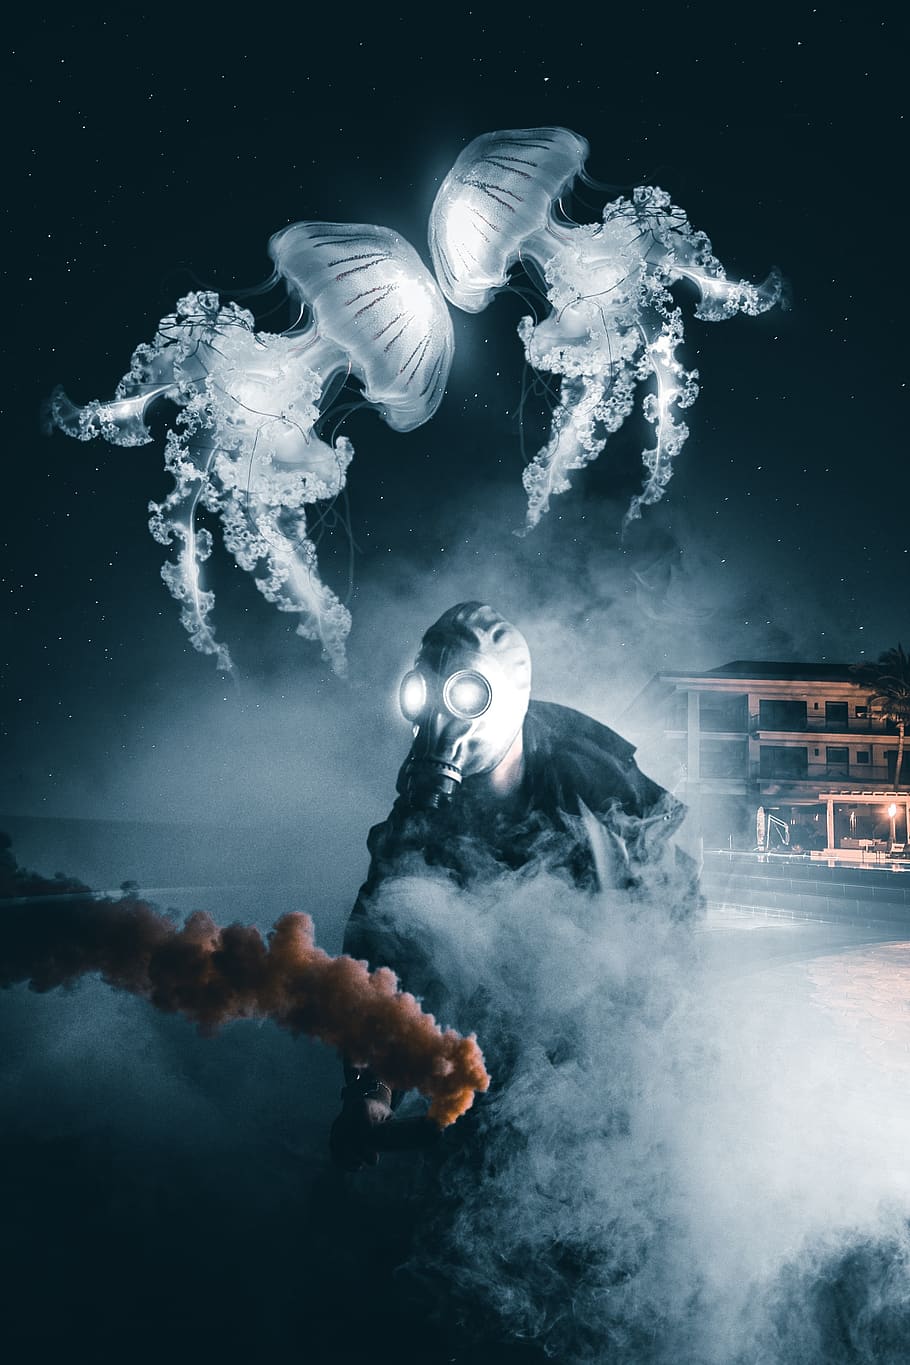 jellyfish, two, mask, fantasy, shop, the veil, man, background, danger, smoke